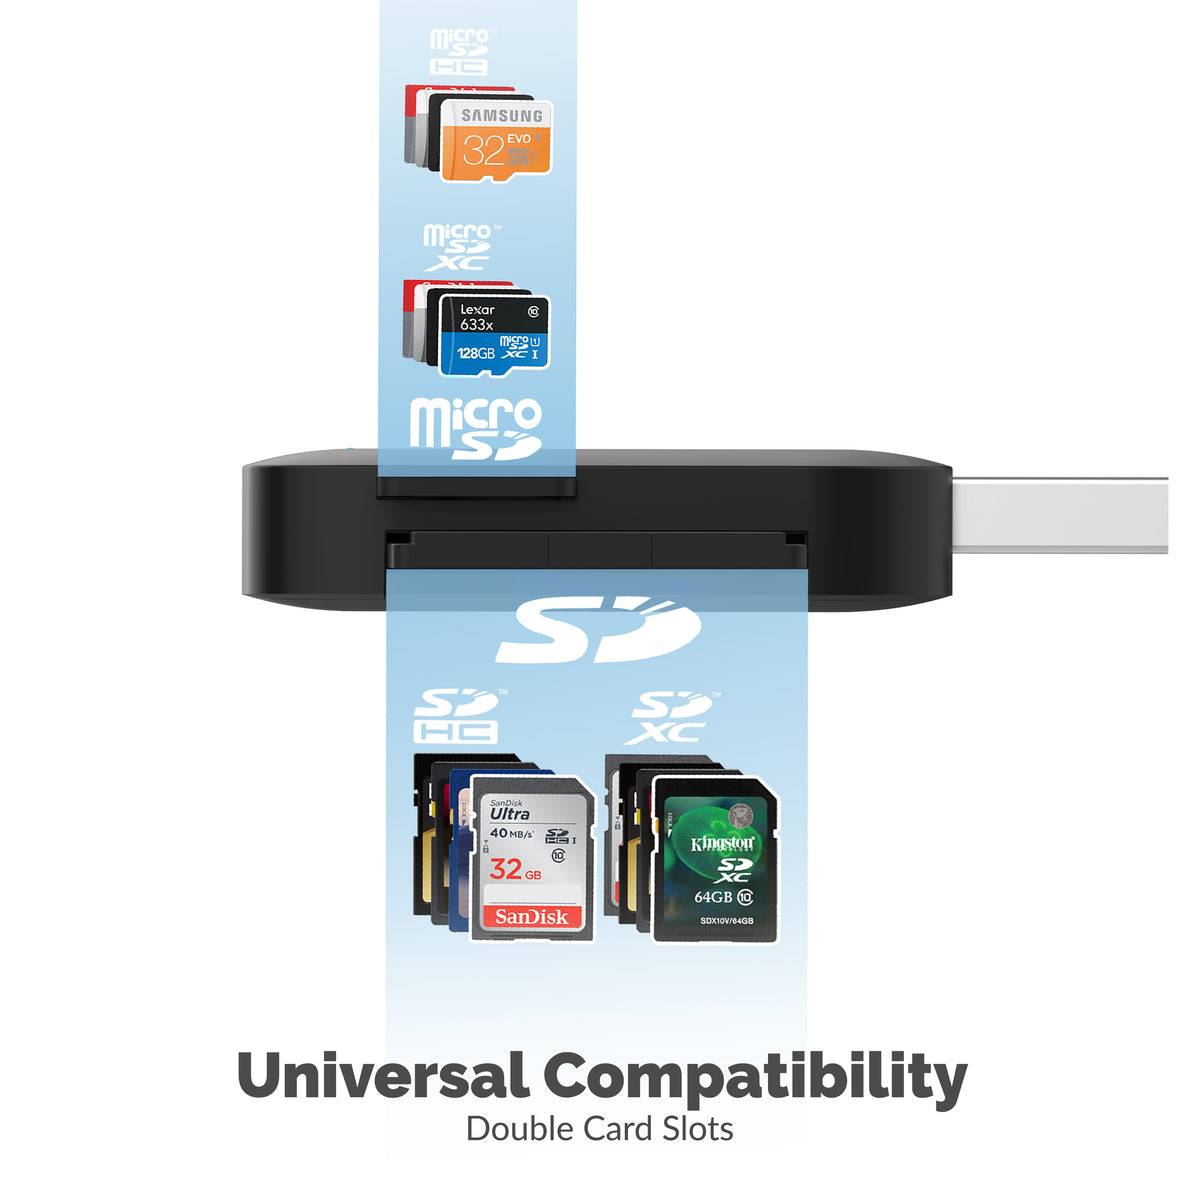 USB 3.0 Micro SD and SD Card Reader